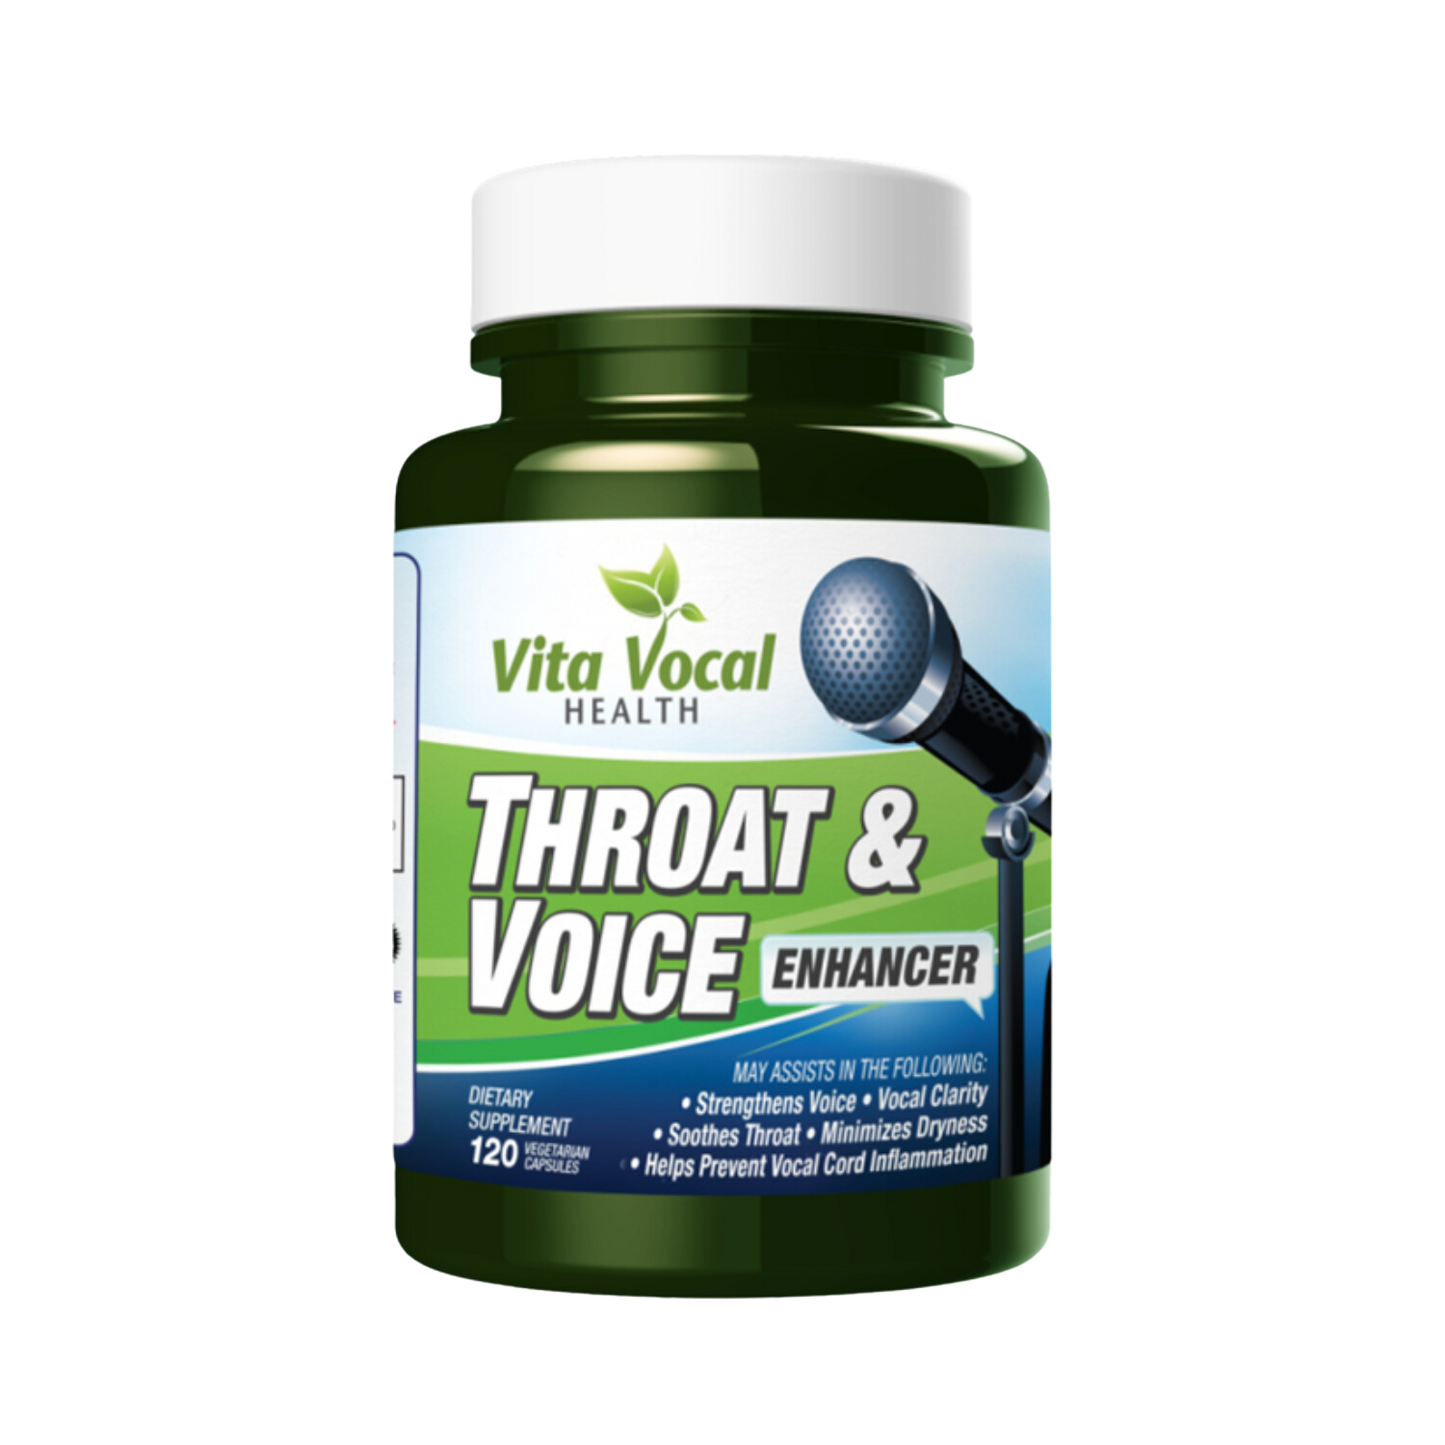 Throat & Voice Enhancer